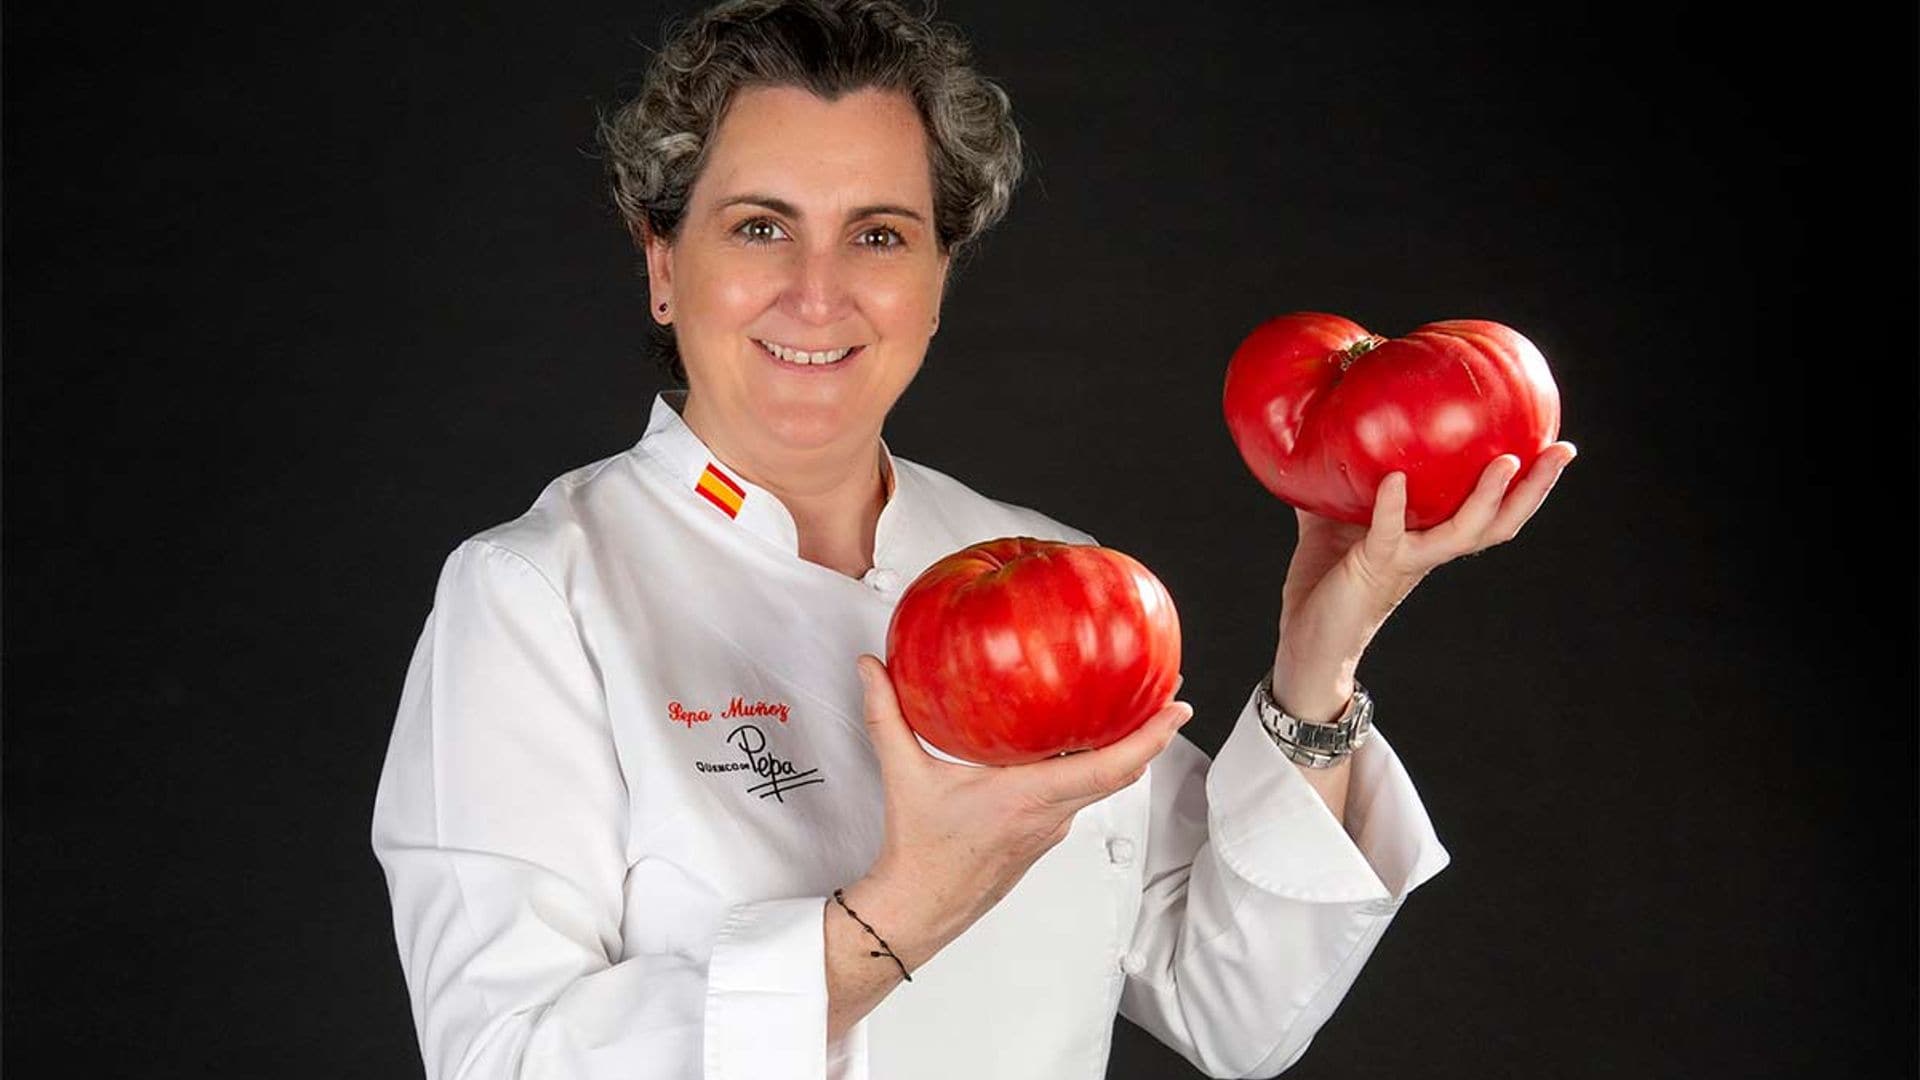 La chef Pepa Muñoz se convertirá en la primera 'Dama de rojo'